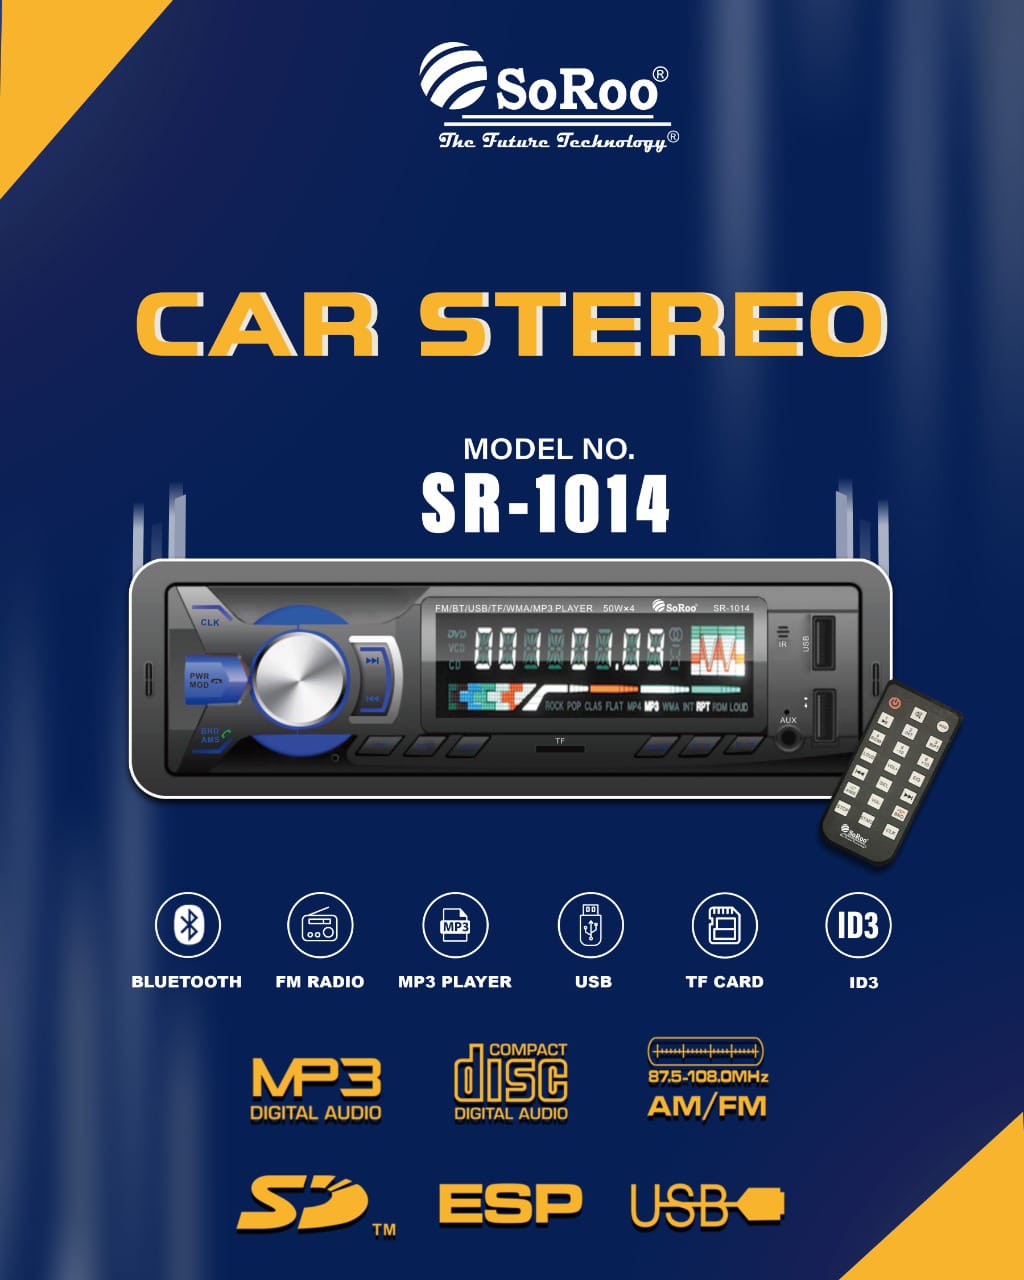 Soroo Car MP3 Player SR-1014